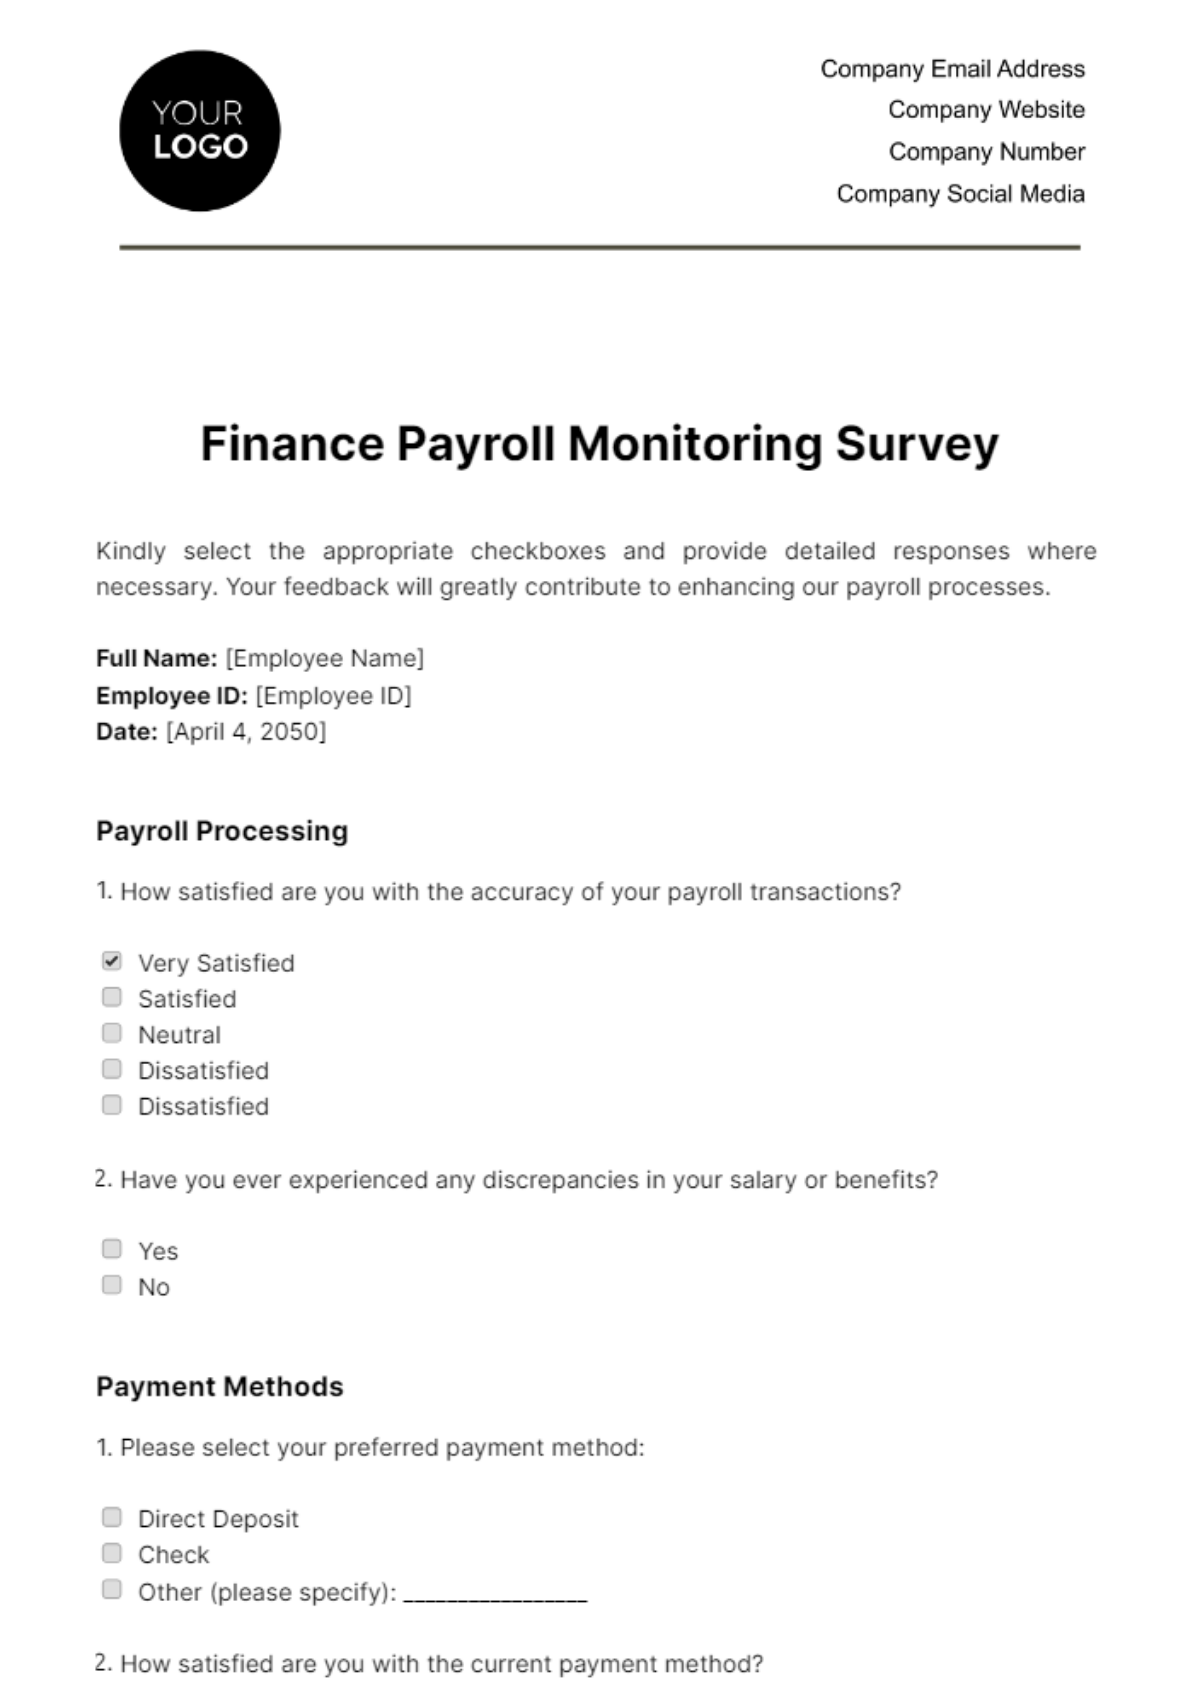 Free Finance Payroll Monitoring Survey Template